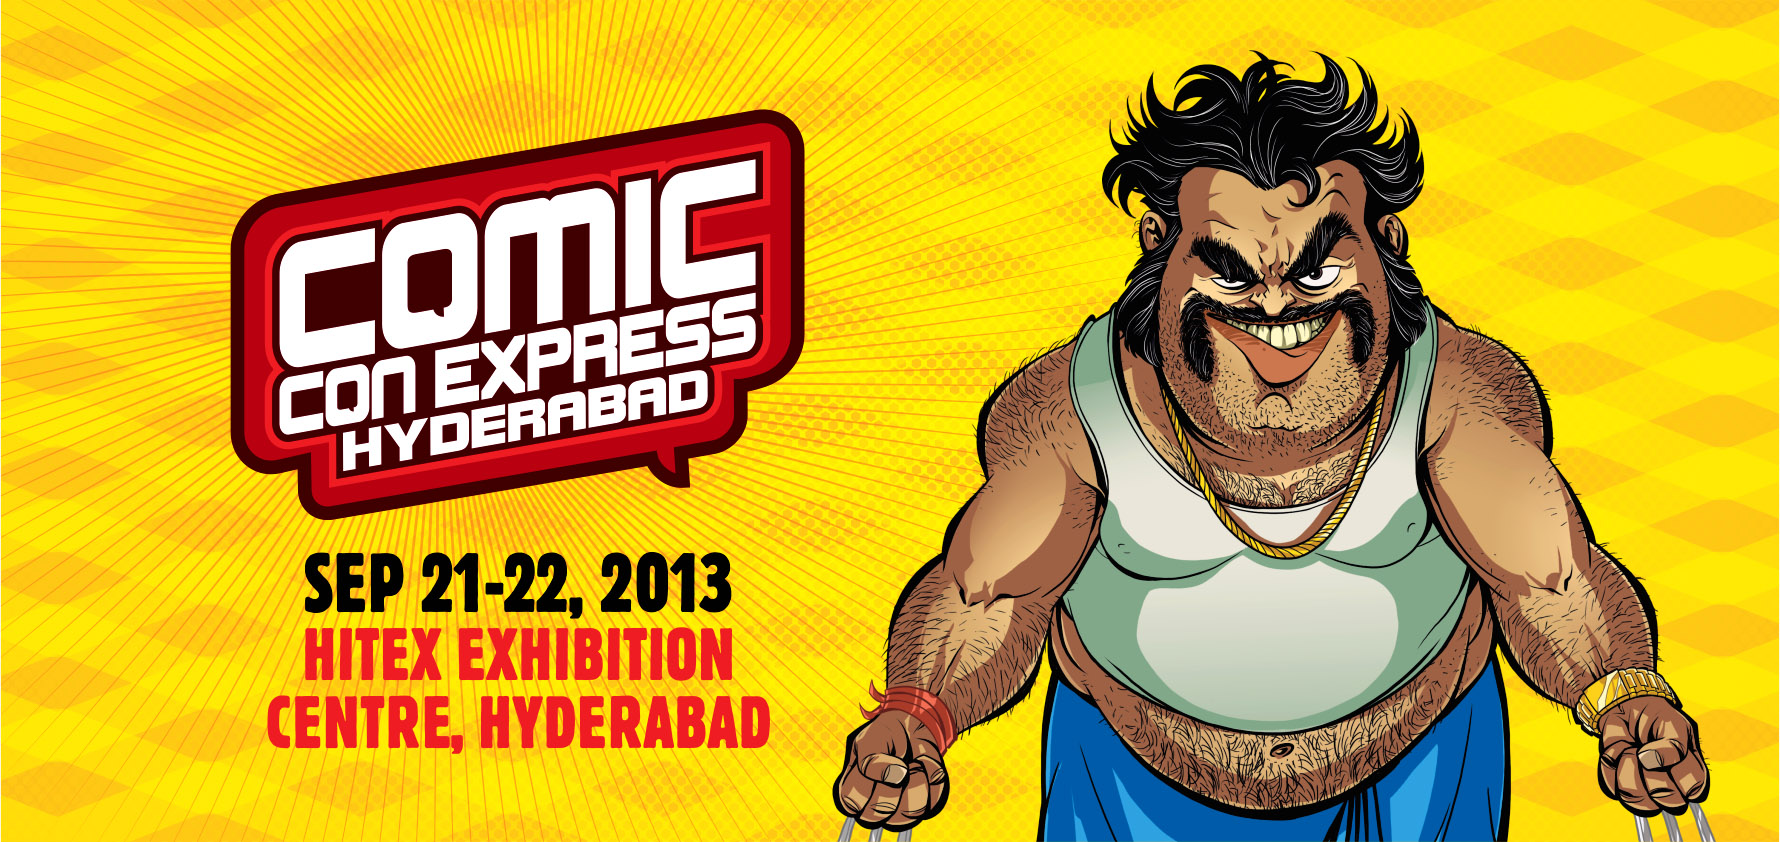 Comic Con Express Hyderabad